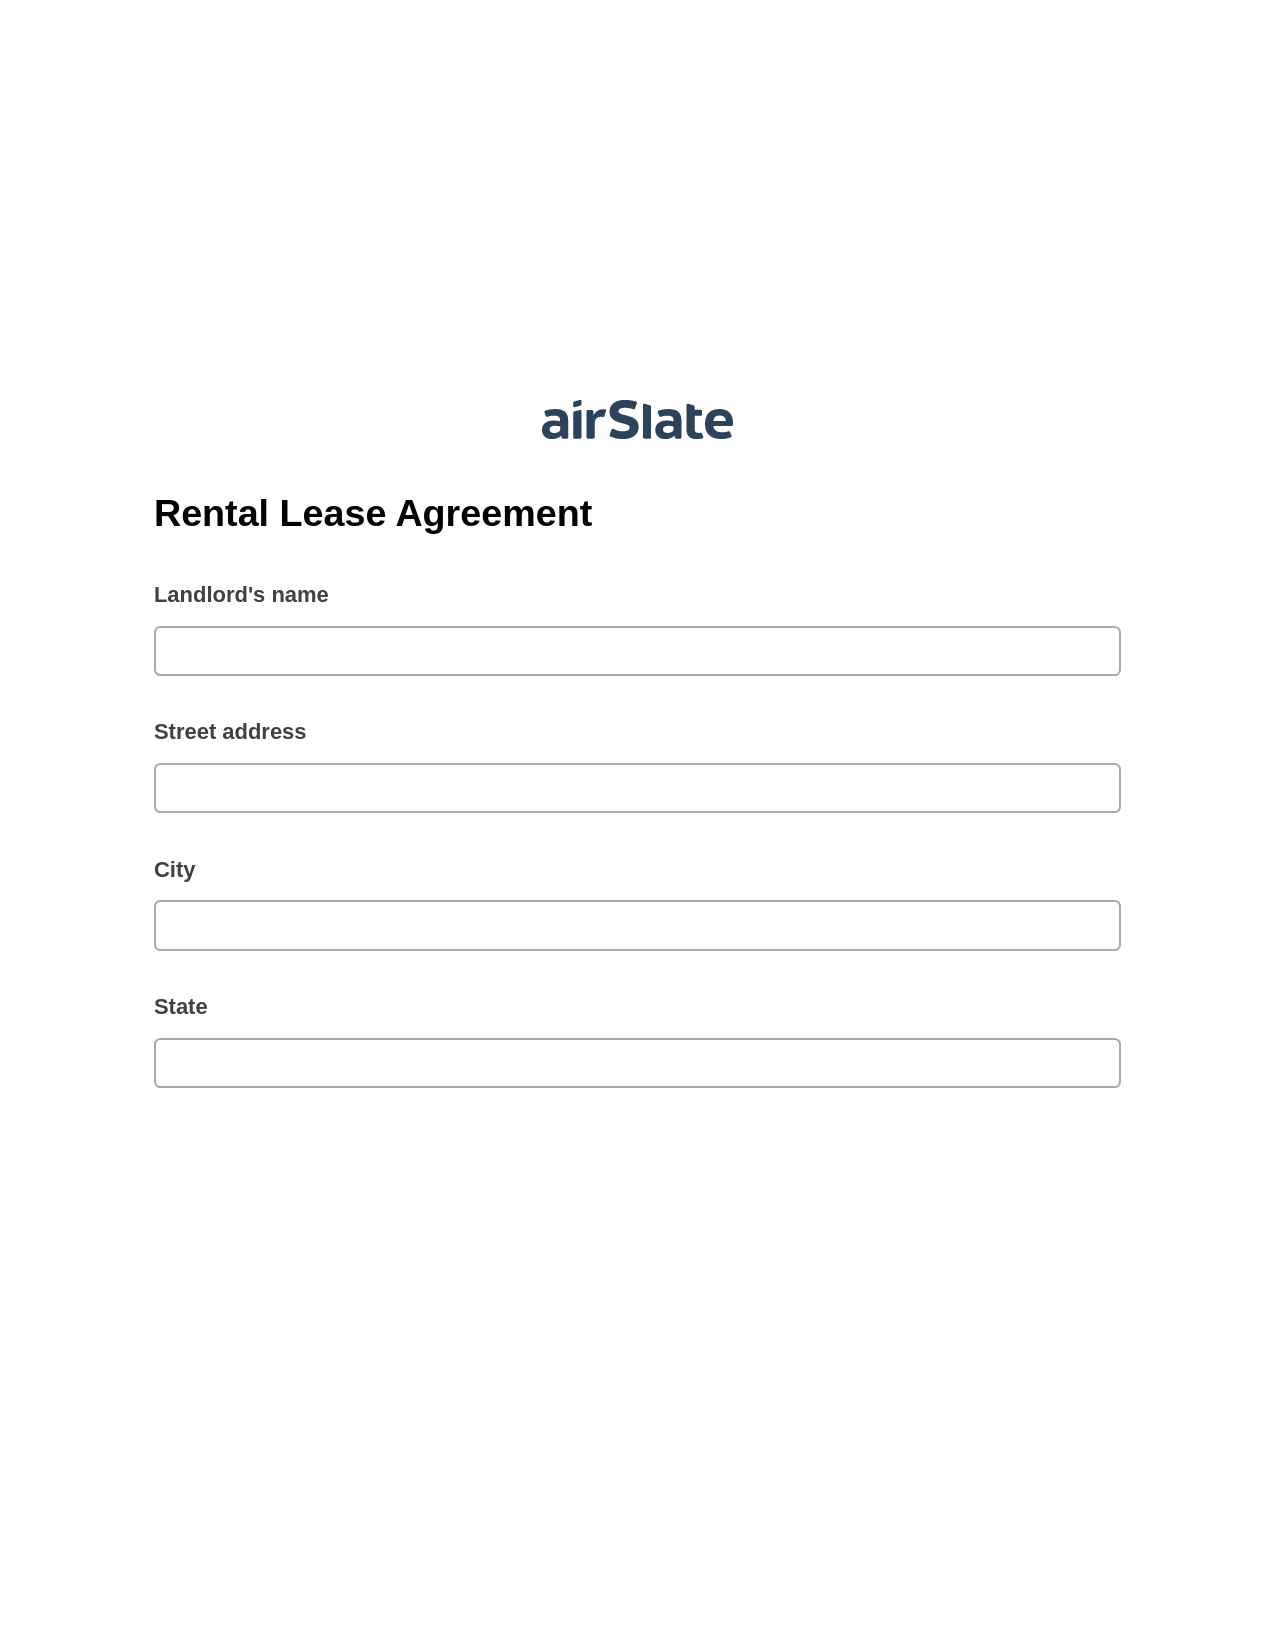 Rental Lease Agreement Pre-fill from CSV File Dropdown Options Bot, Invoke Salesforce Process Bot, OneDrive Bot